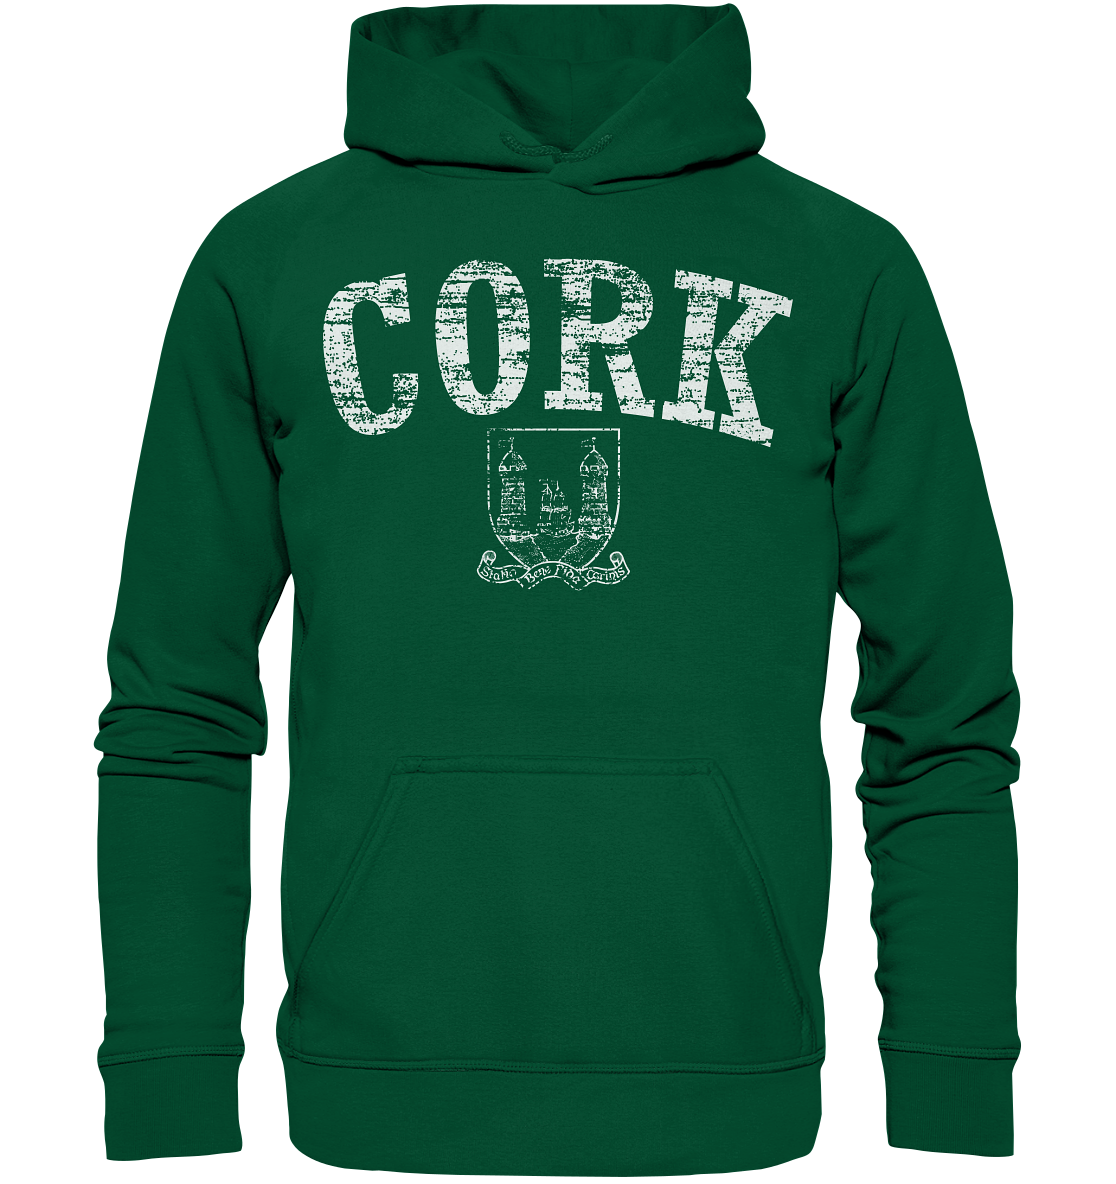 "Cork - Statio Bene Fida Carinis" - Basic Unisex Hoodie